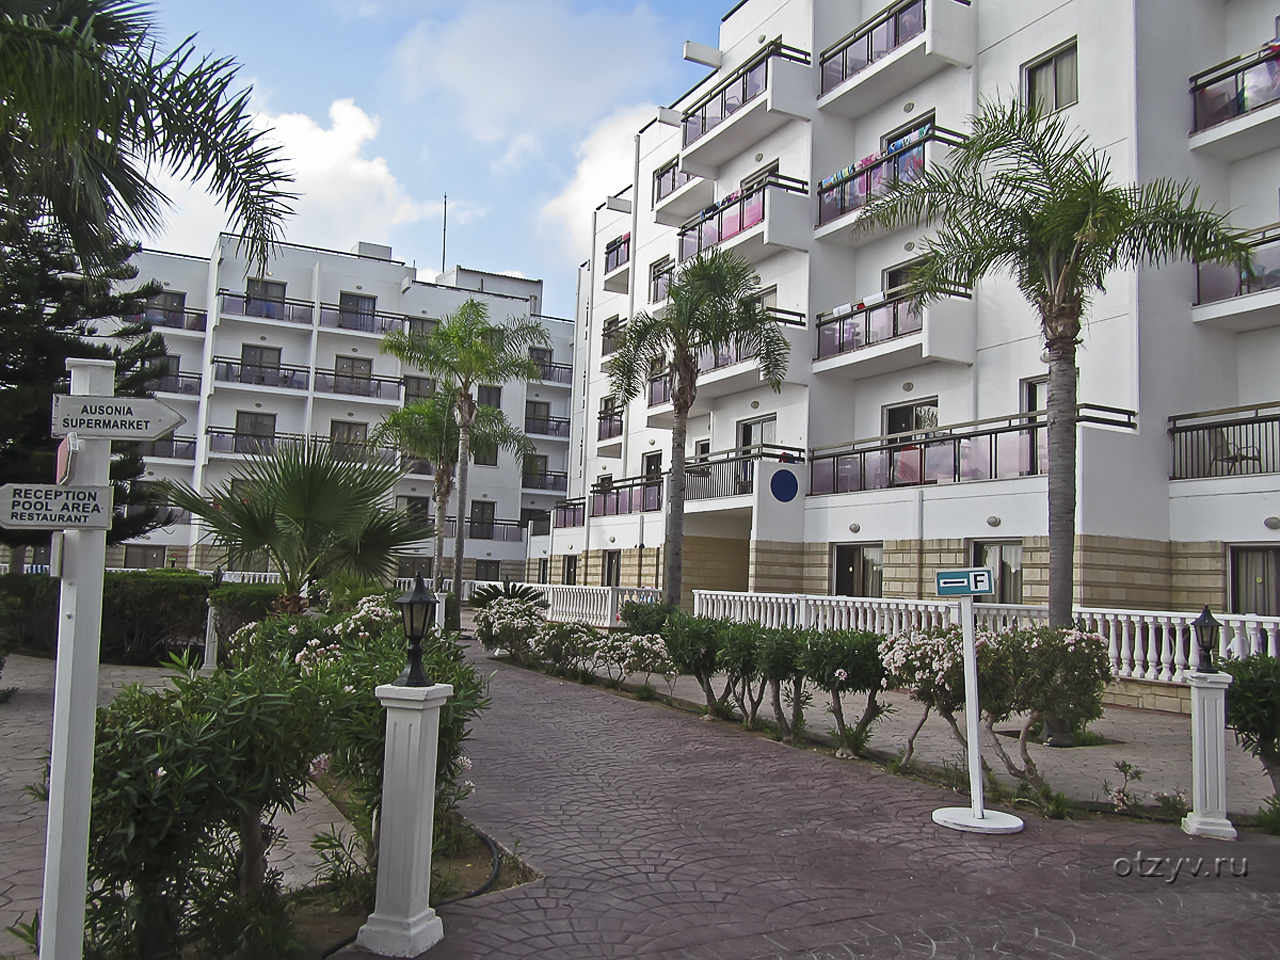 Marlita Hotel Apartments